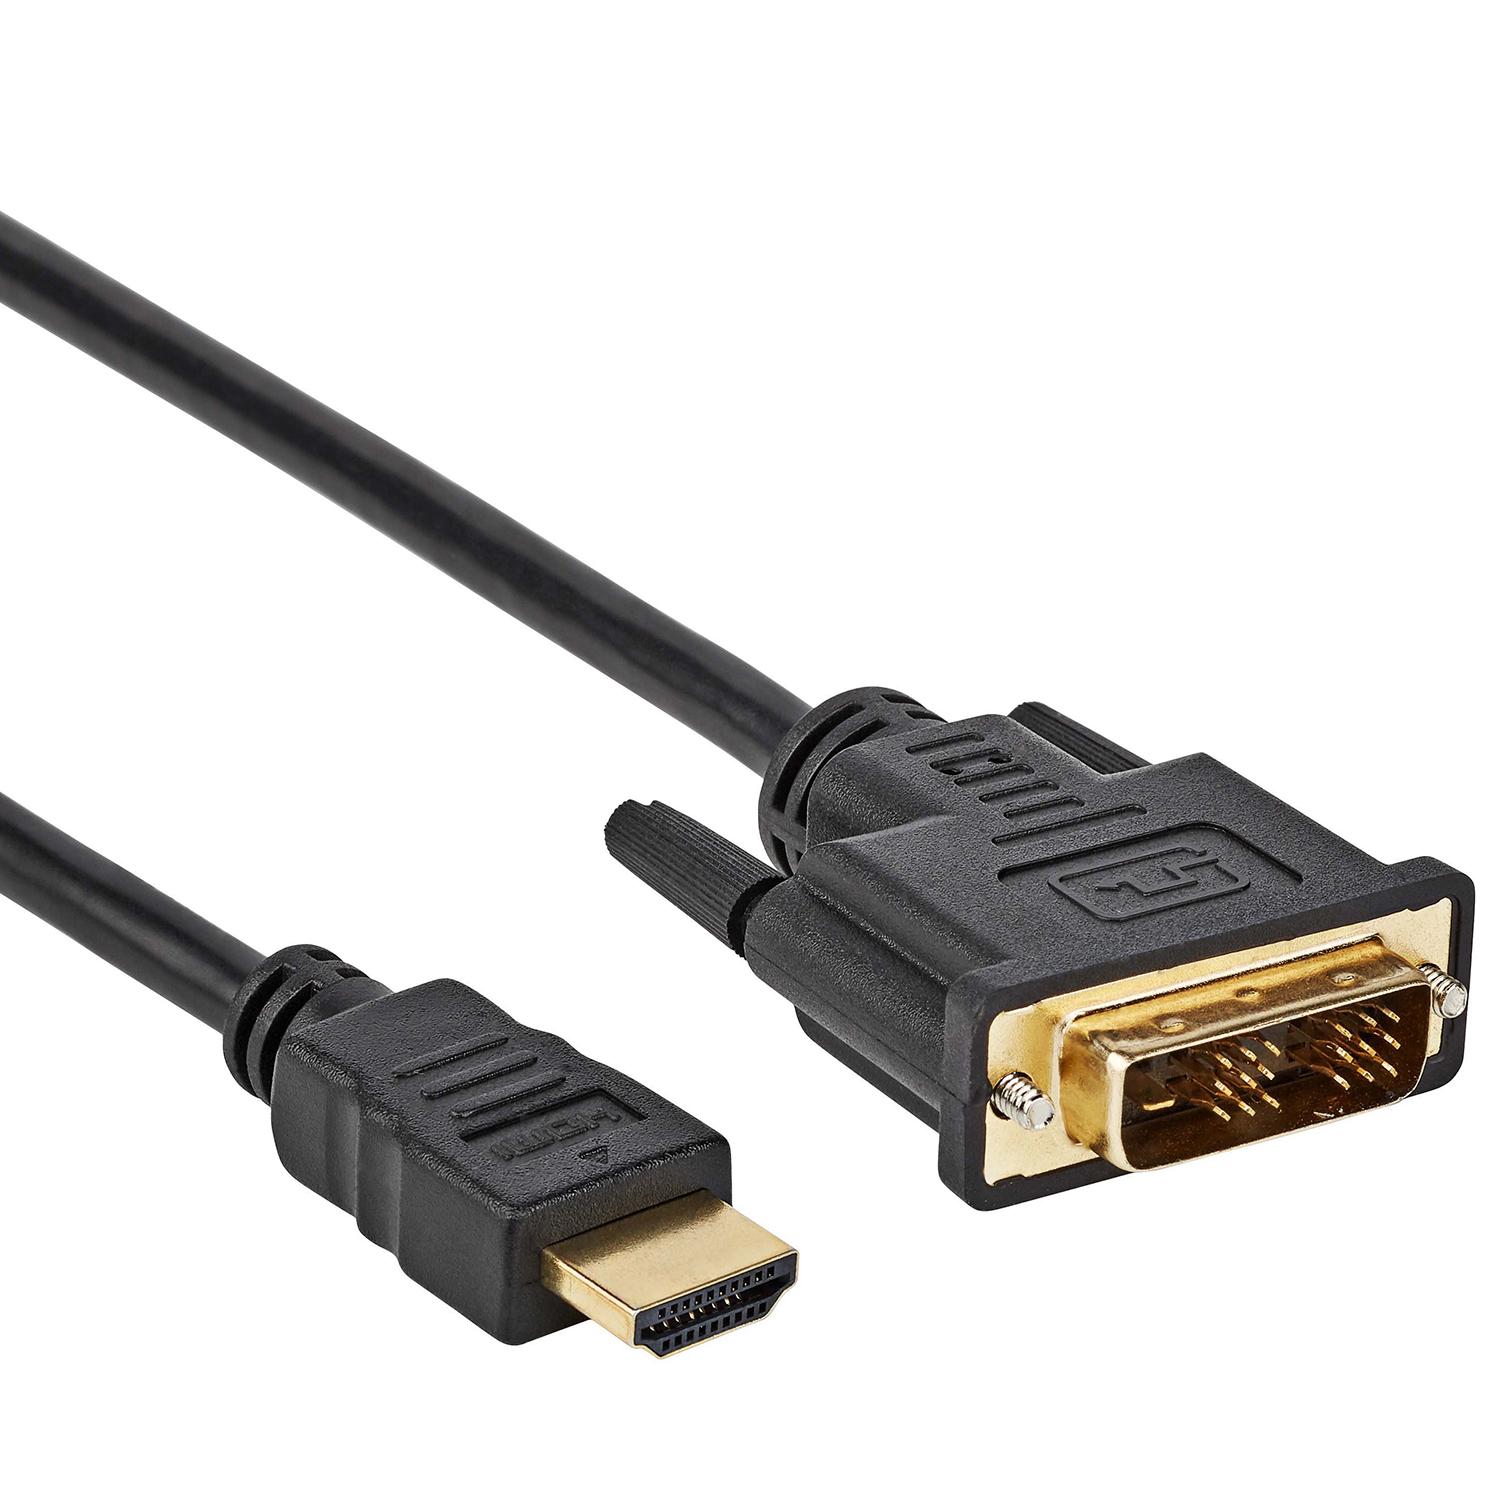 Van Dvi Naar Hdmi HDMI - DVI Kabel - HDMI - DVI Kabel, Connector 1: DVI-D Male Single Link  (18+1), Connector 2: HDMI Male, Verguld, 2.5 Meter.